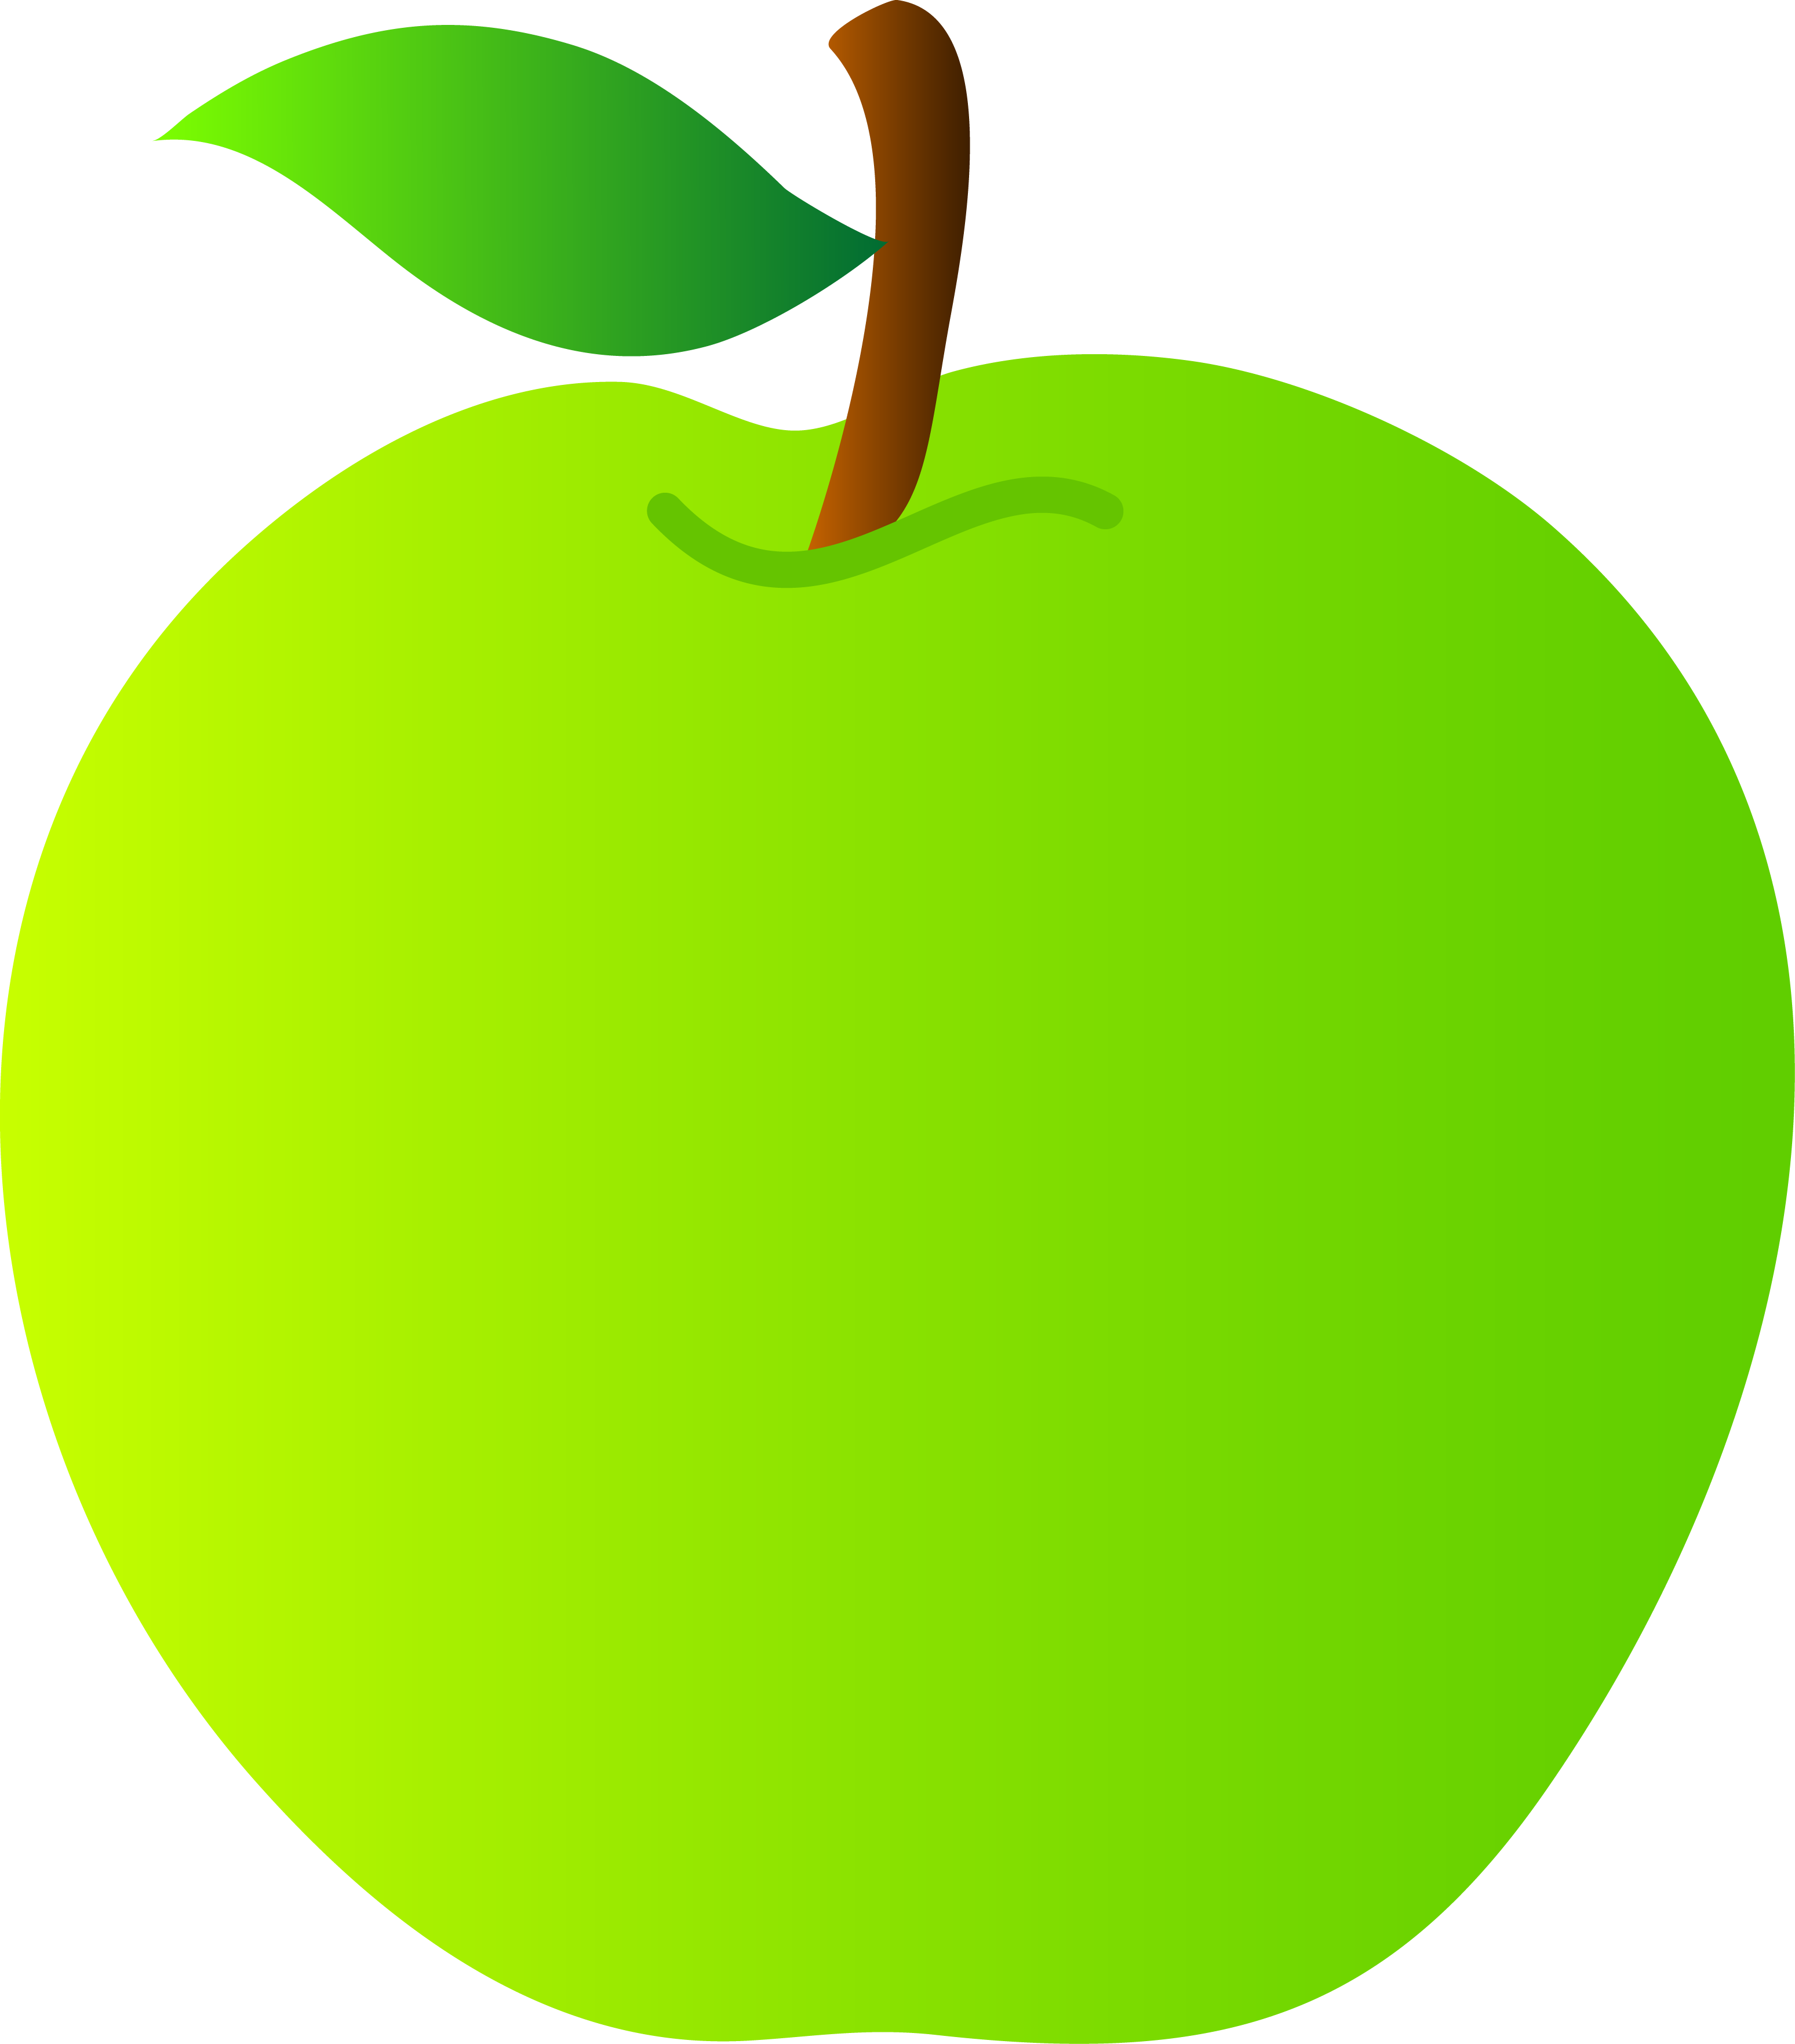 Green Apple Vector Drawing - Free Clip Art